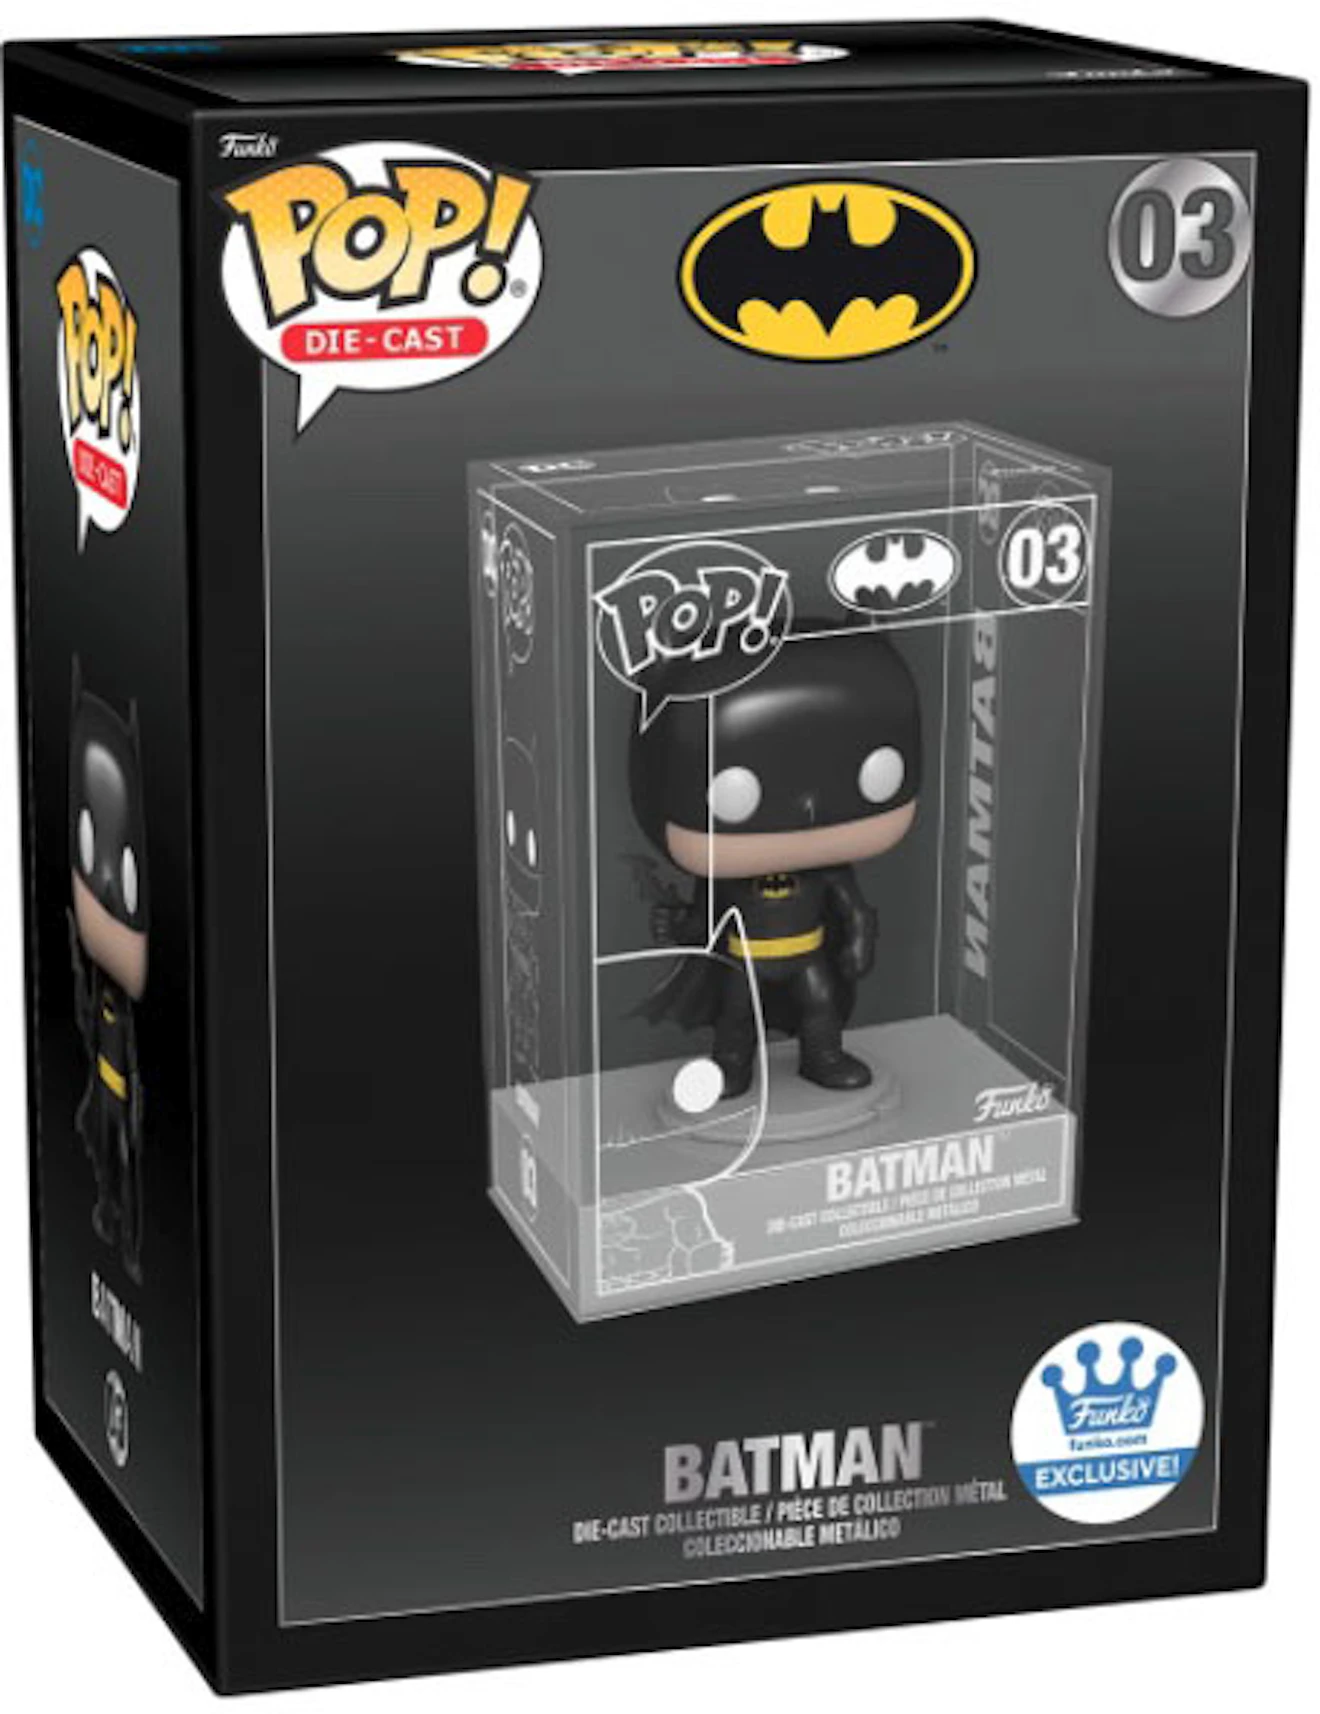 Funko Pop! Die-Cast Batman Funko Shop Exclusive Figure #03 - FW21 - US